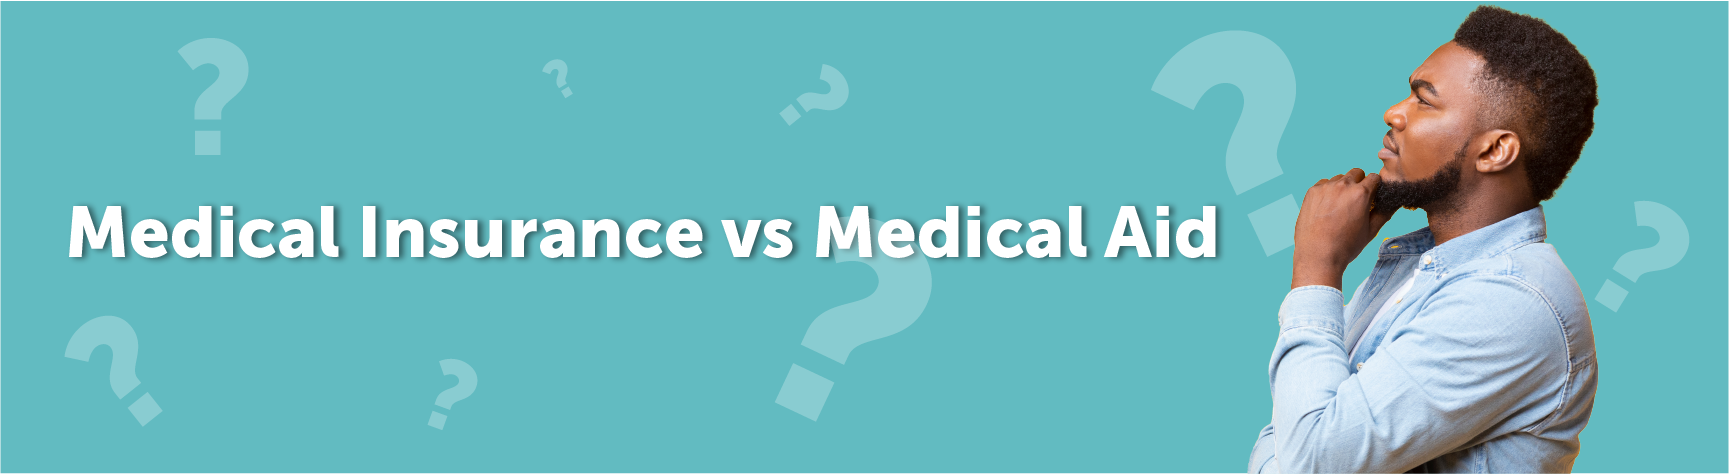 Medical Insurance vs Medical Aid